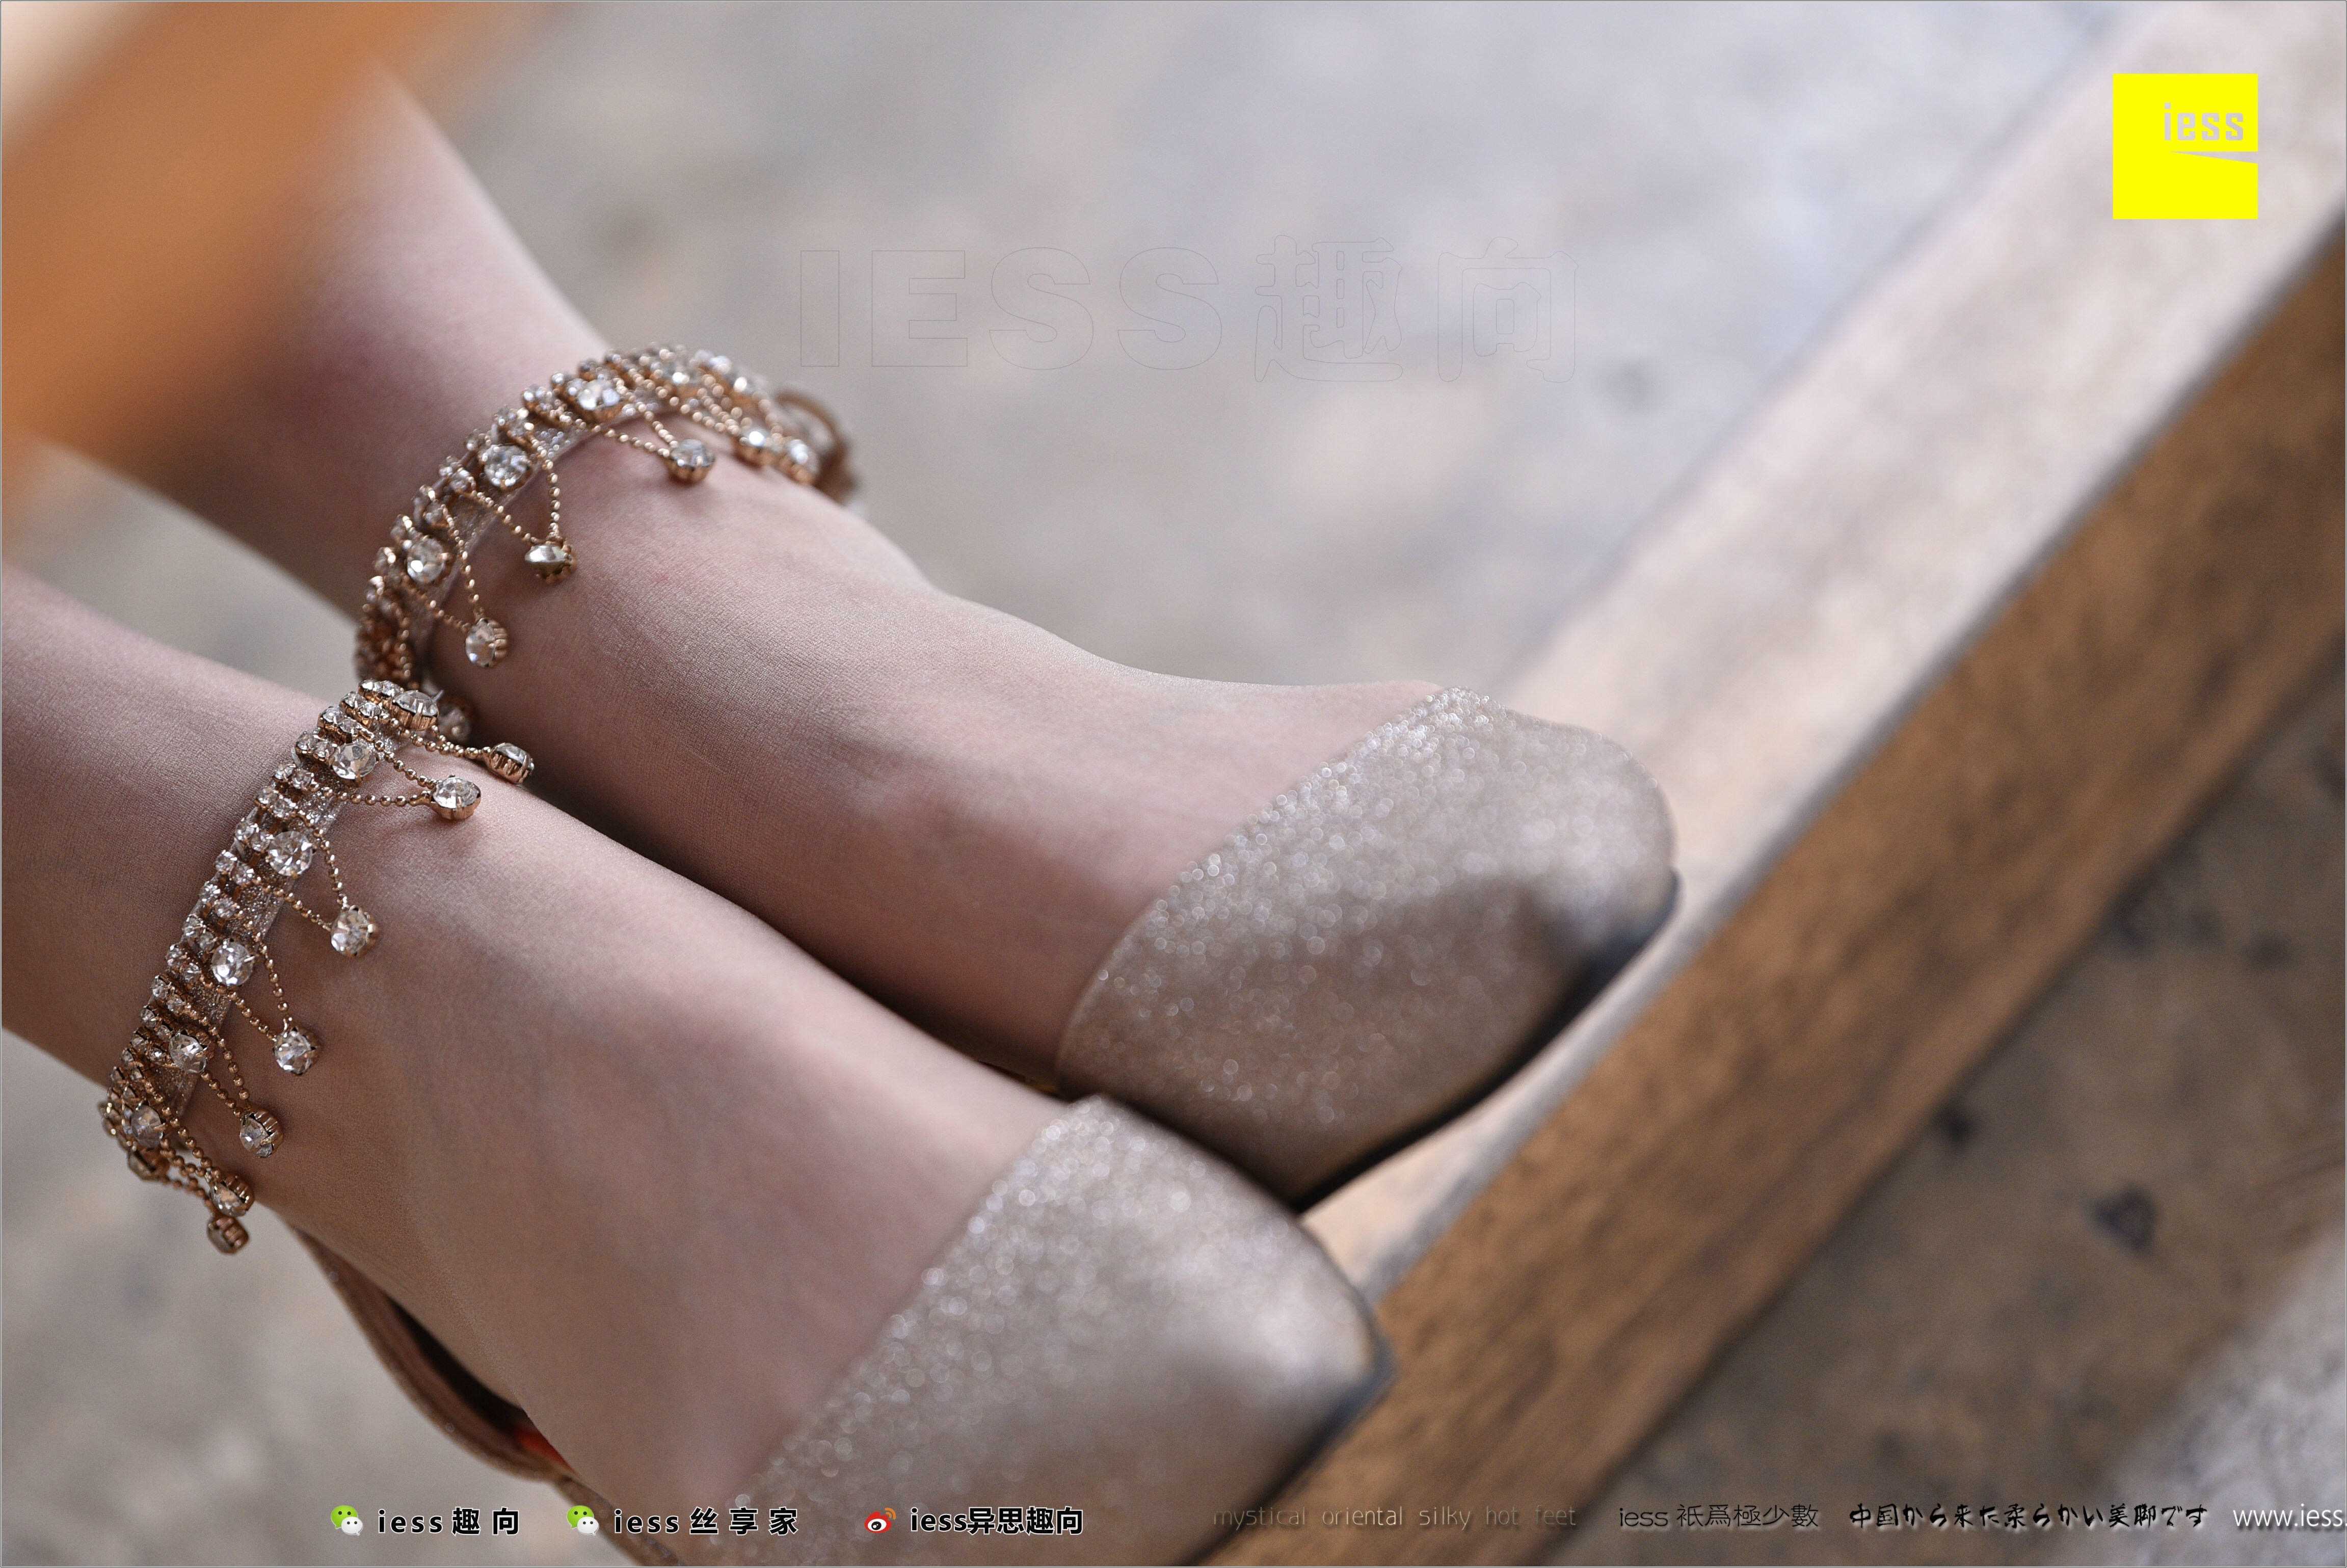 China Beauty Legs and feet 494